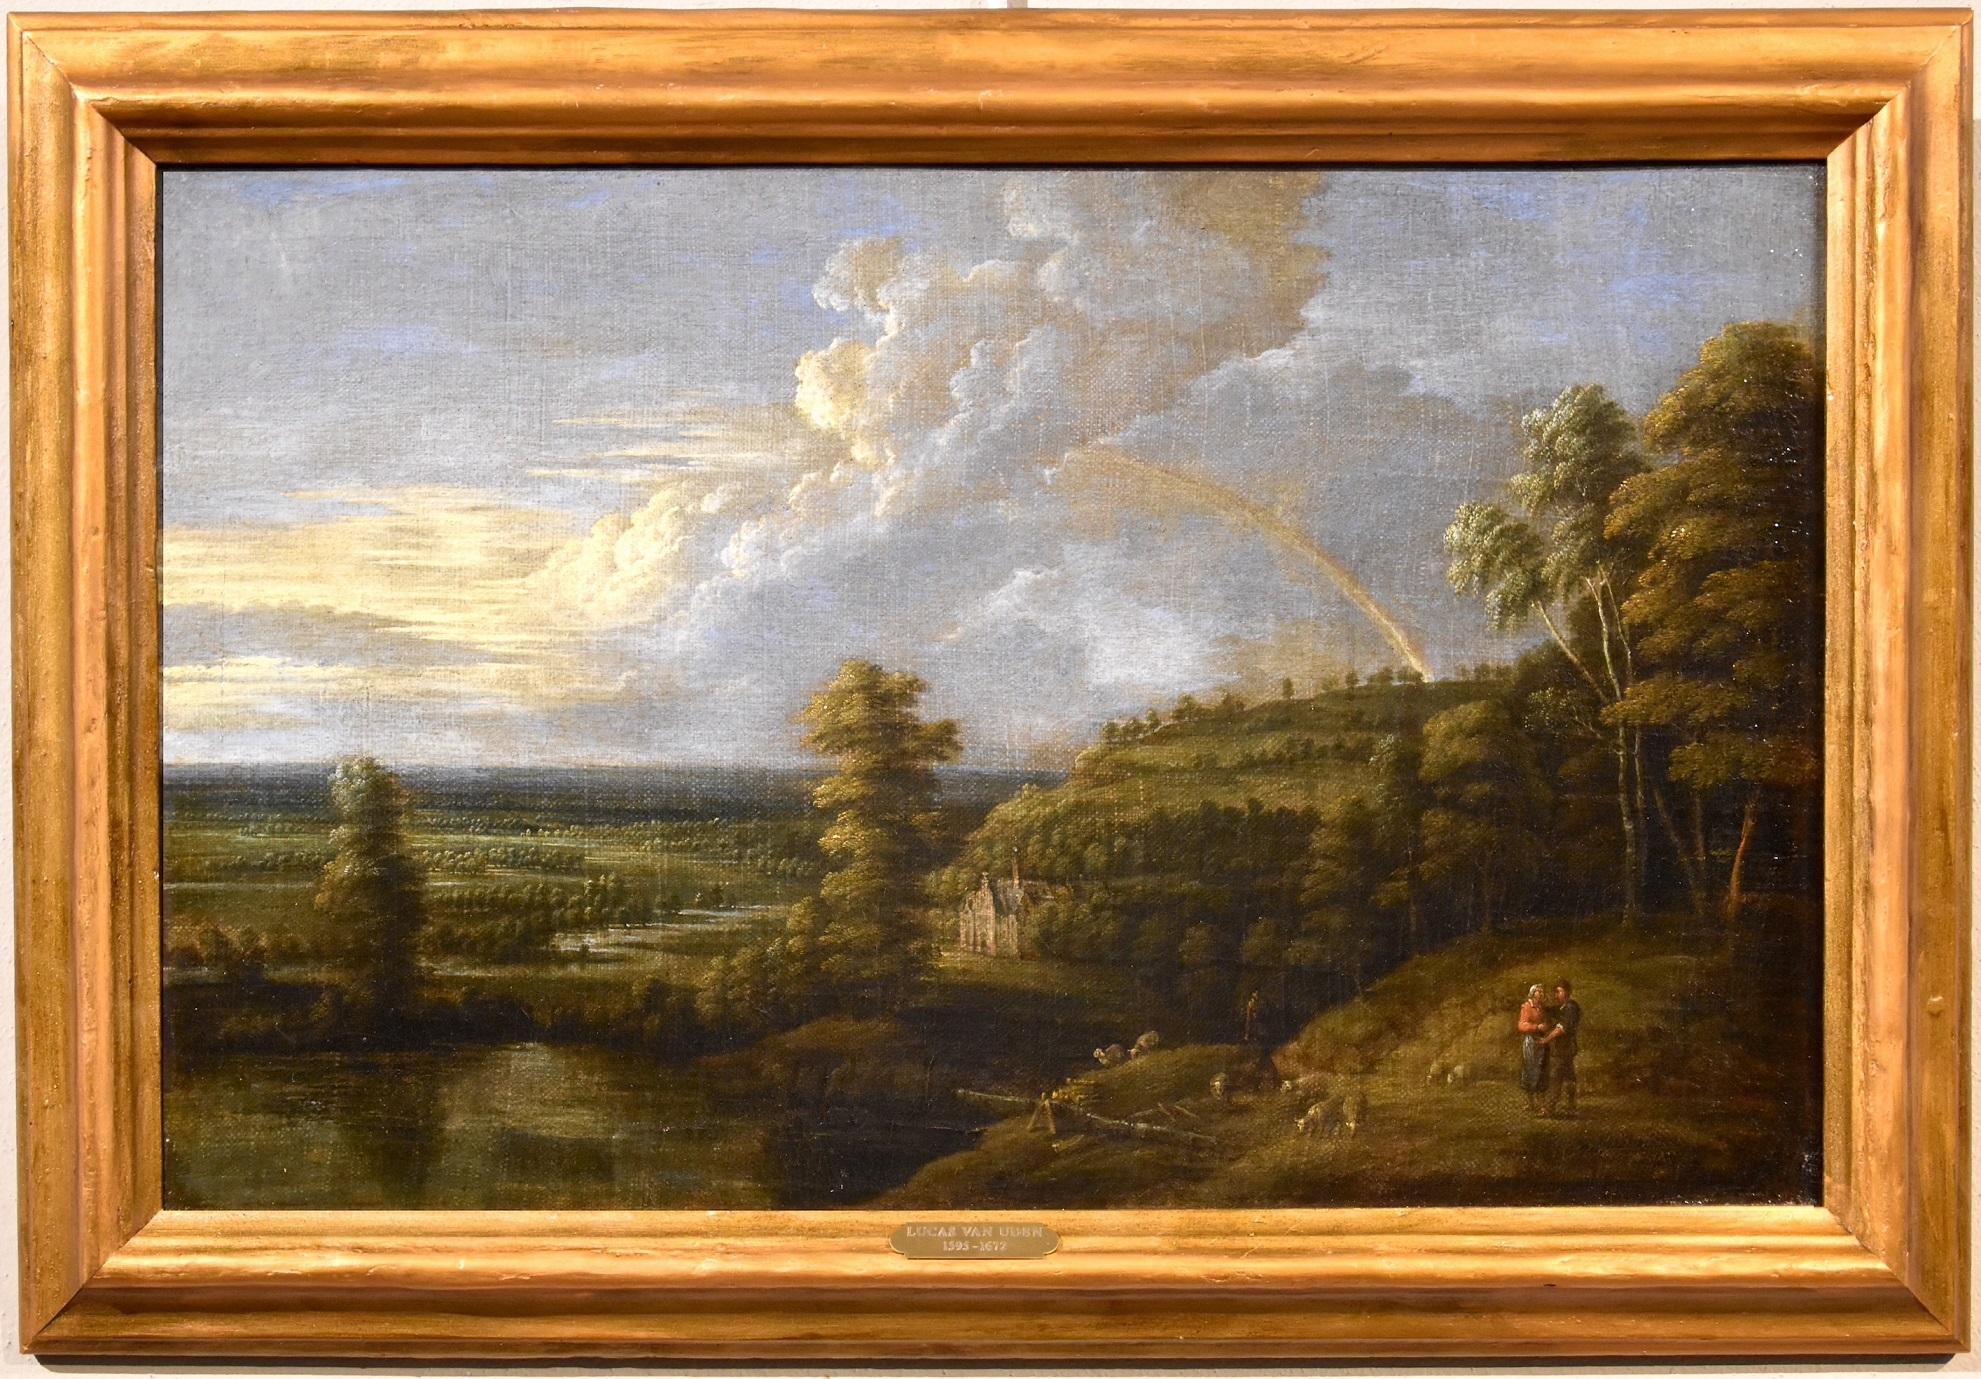 Van Uden Landscapes Paint Oil on canvas Old master 17th Century Flemish Wood Art - Painting by Lucas Van Uden (Antwerp 1595 - Antwerp 1672)